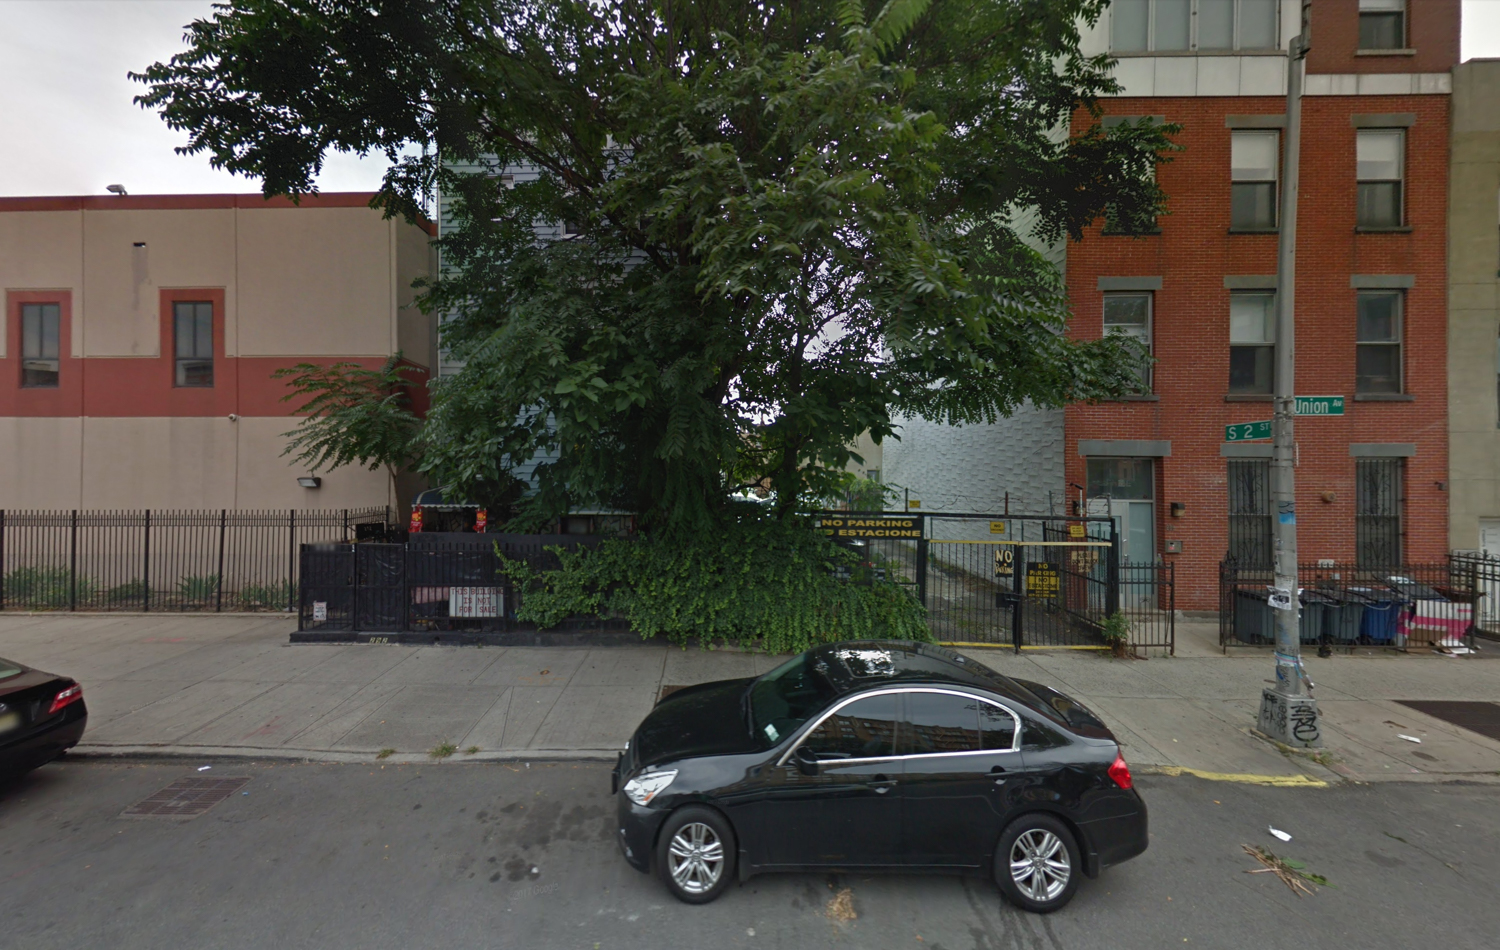 288 Union Avenue, via Google Maps